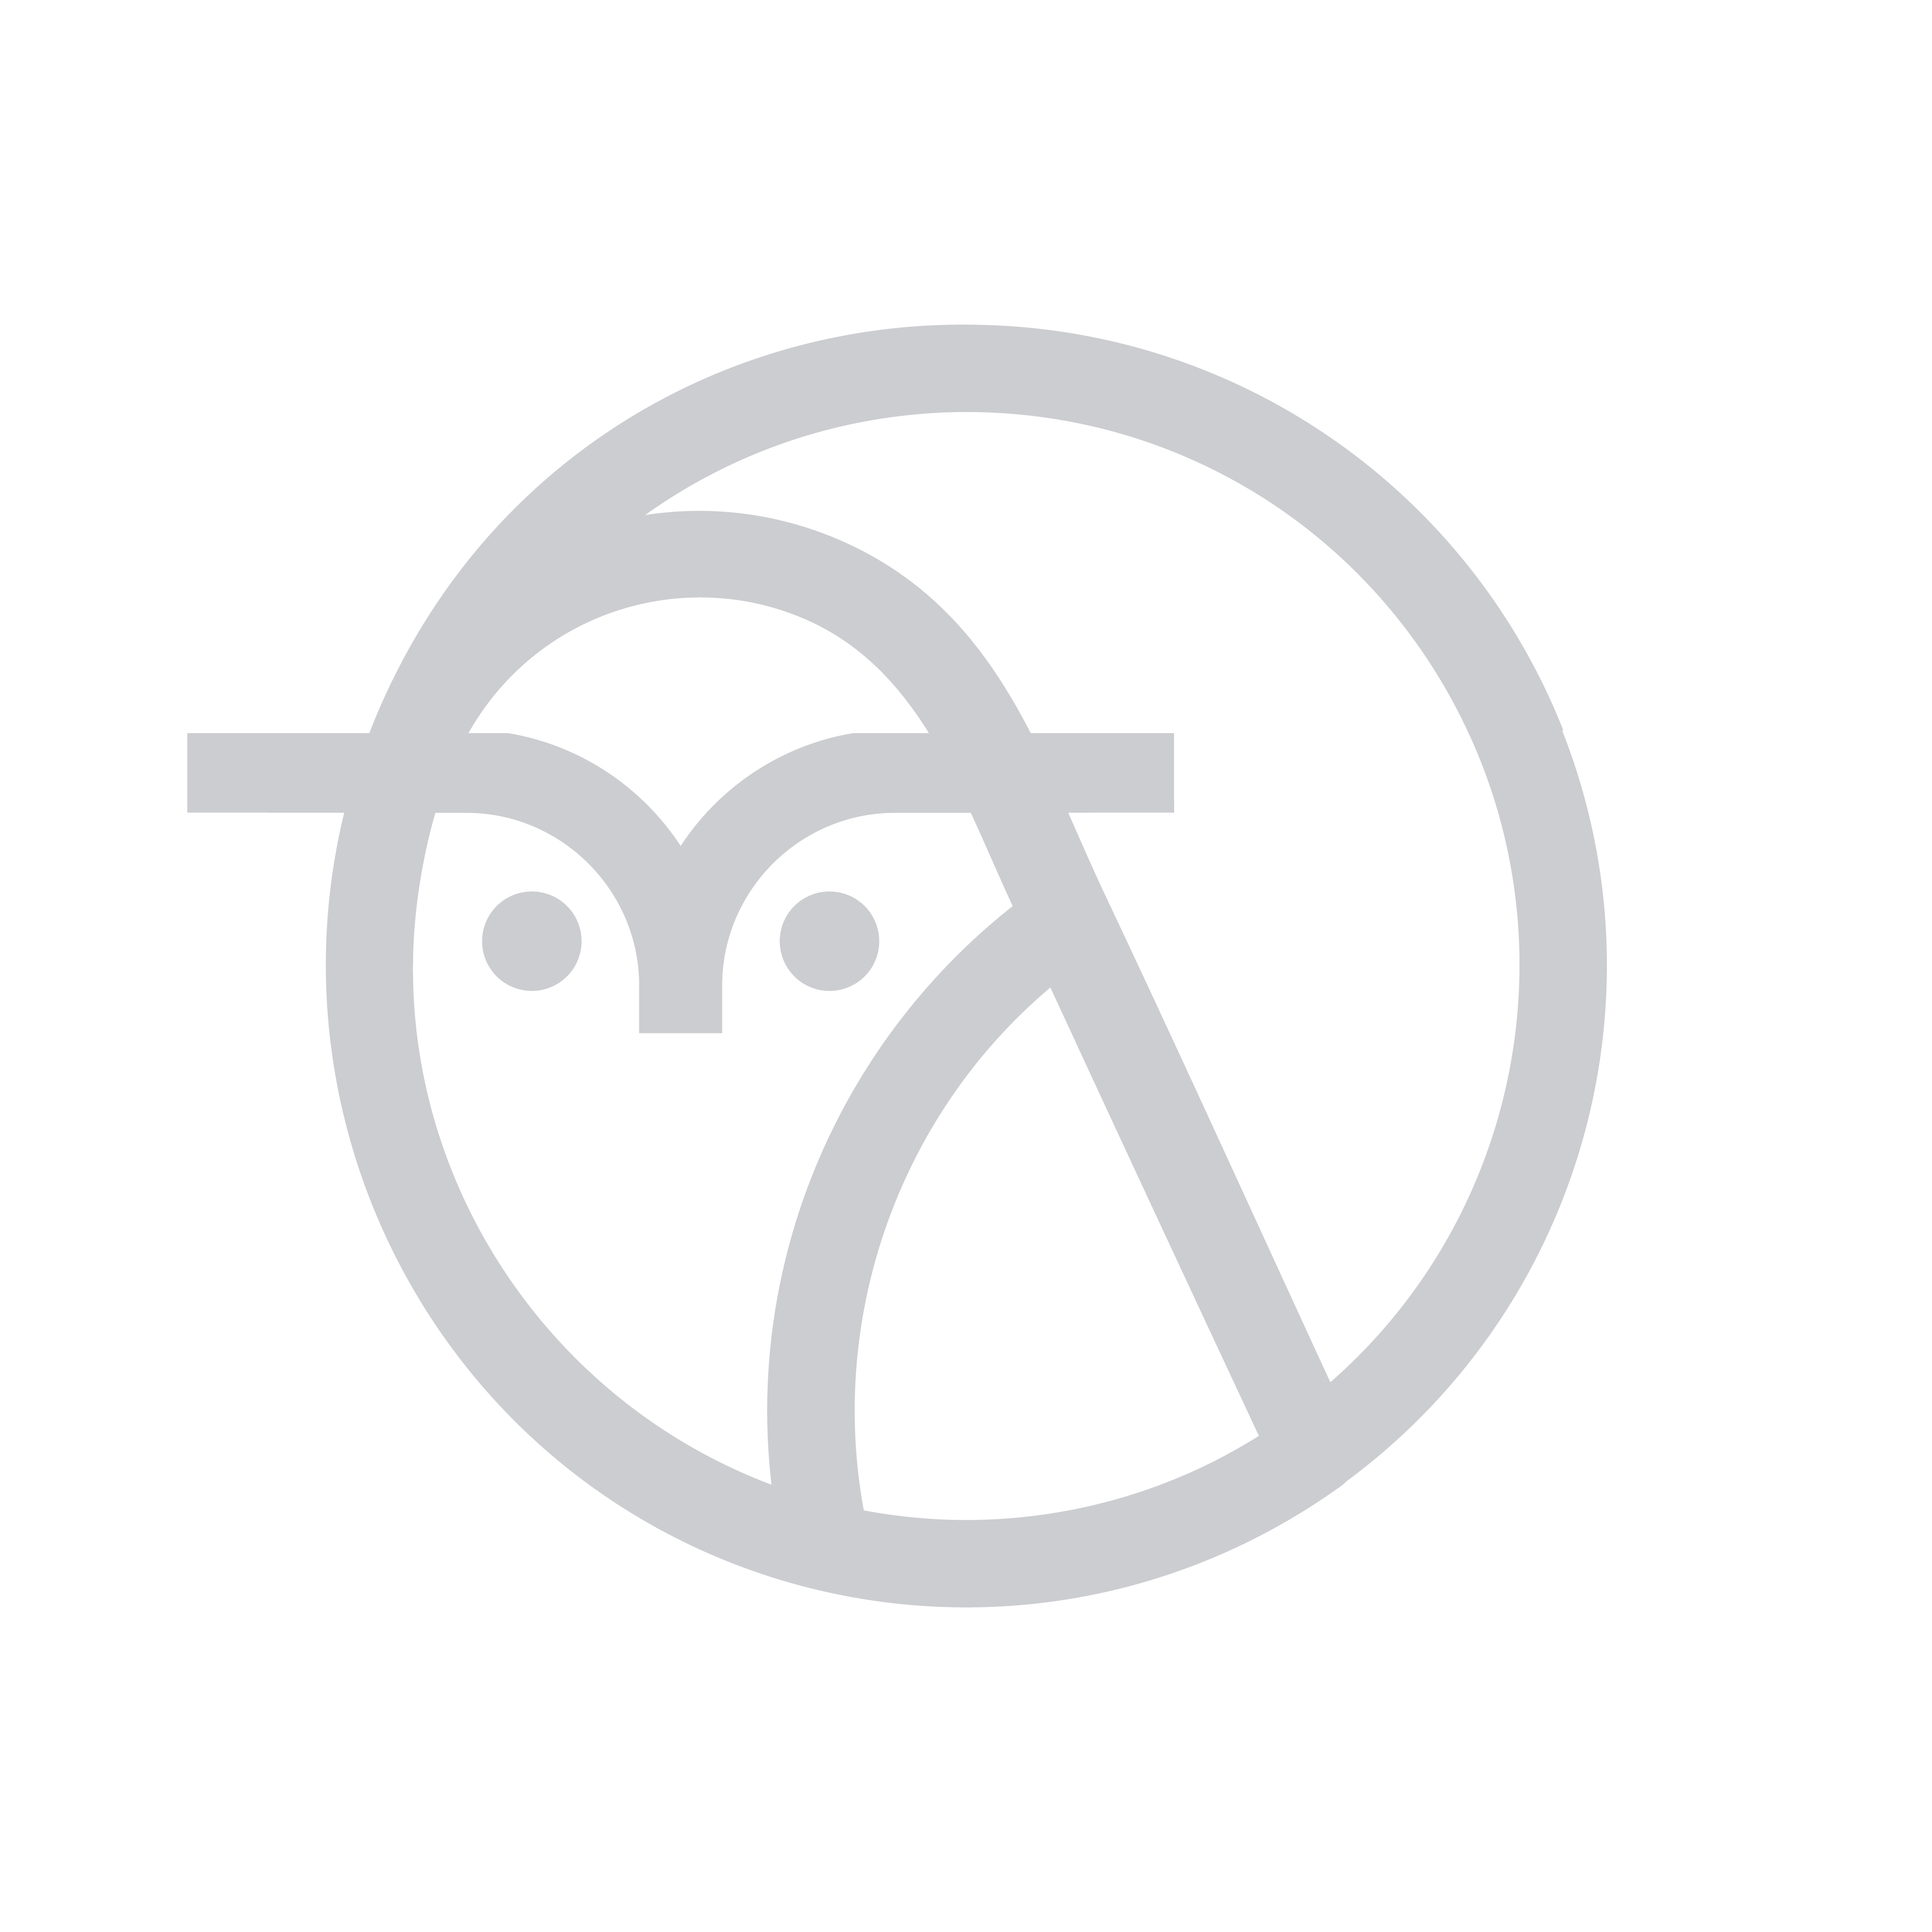 Owl Logo logo design by logo designer Spasova Design for your inspiration and for the worlds largest logo competition